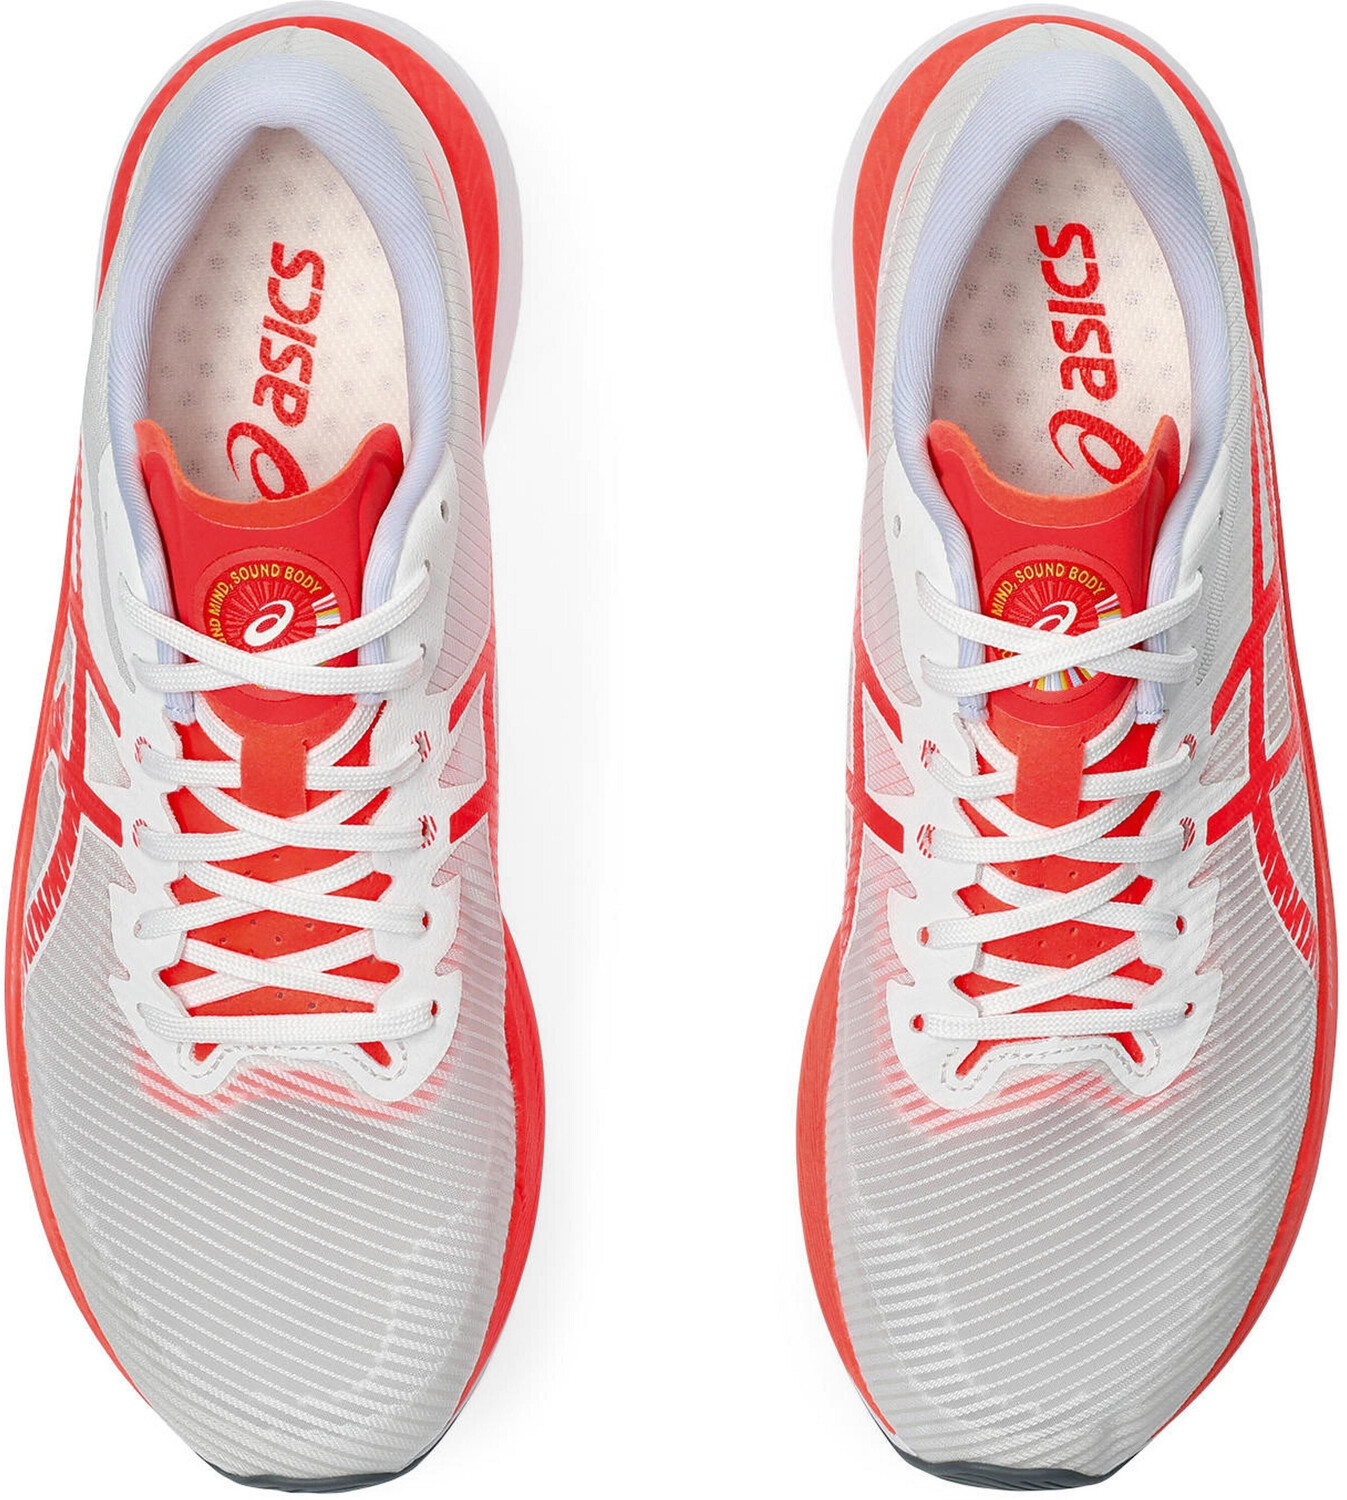  ASICS Women's Magic Speed Running Shoes, 5, Sunrise RED/White